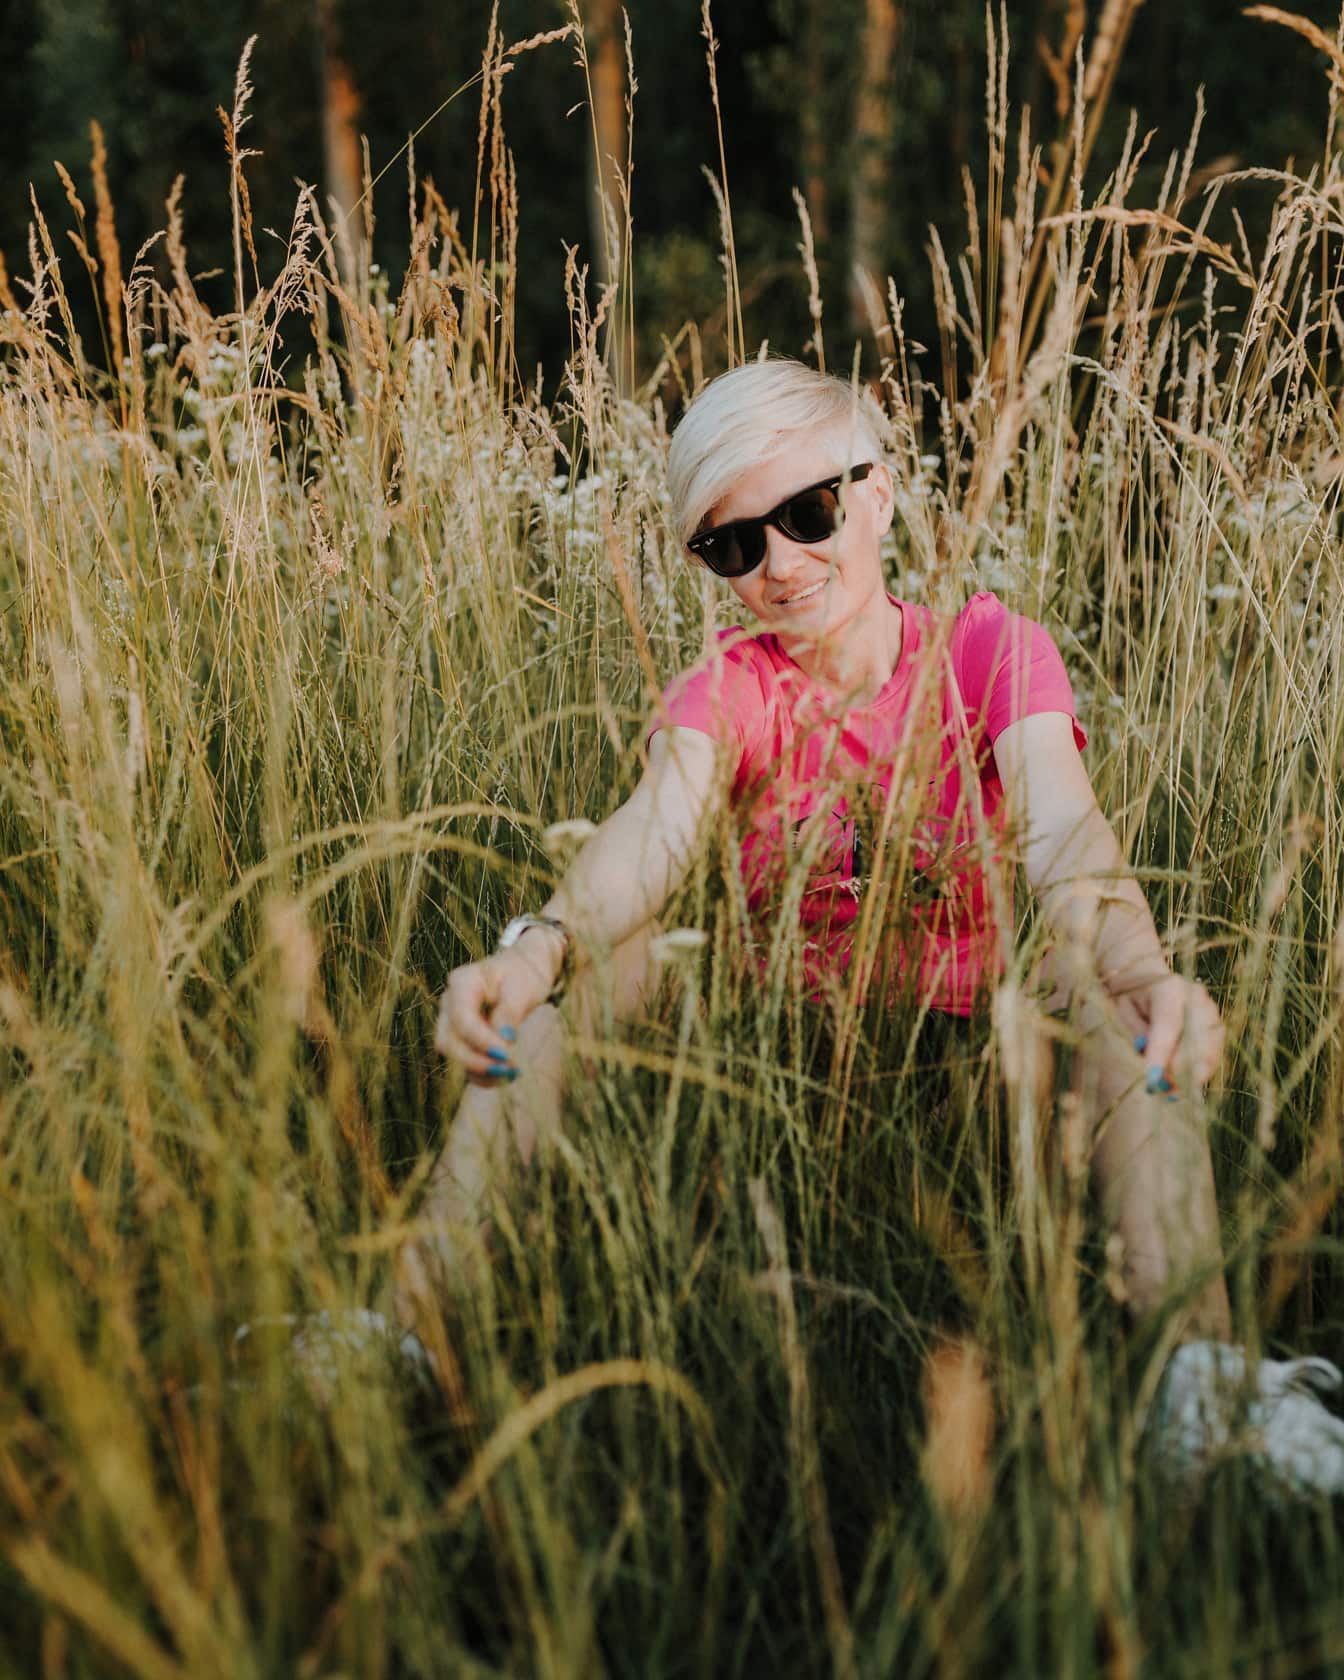 Glimlachende vrouw met korte blonde kapselzitting in lang gras